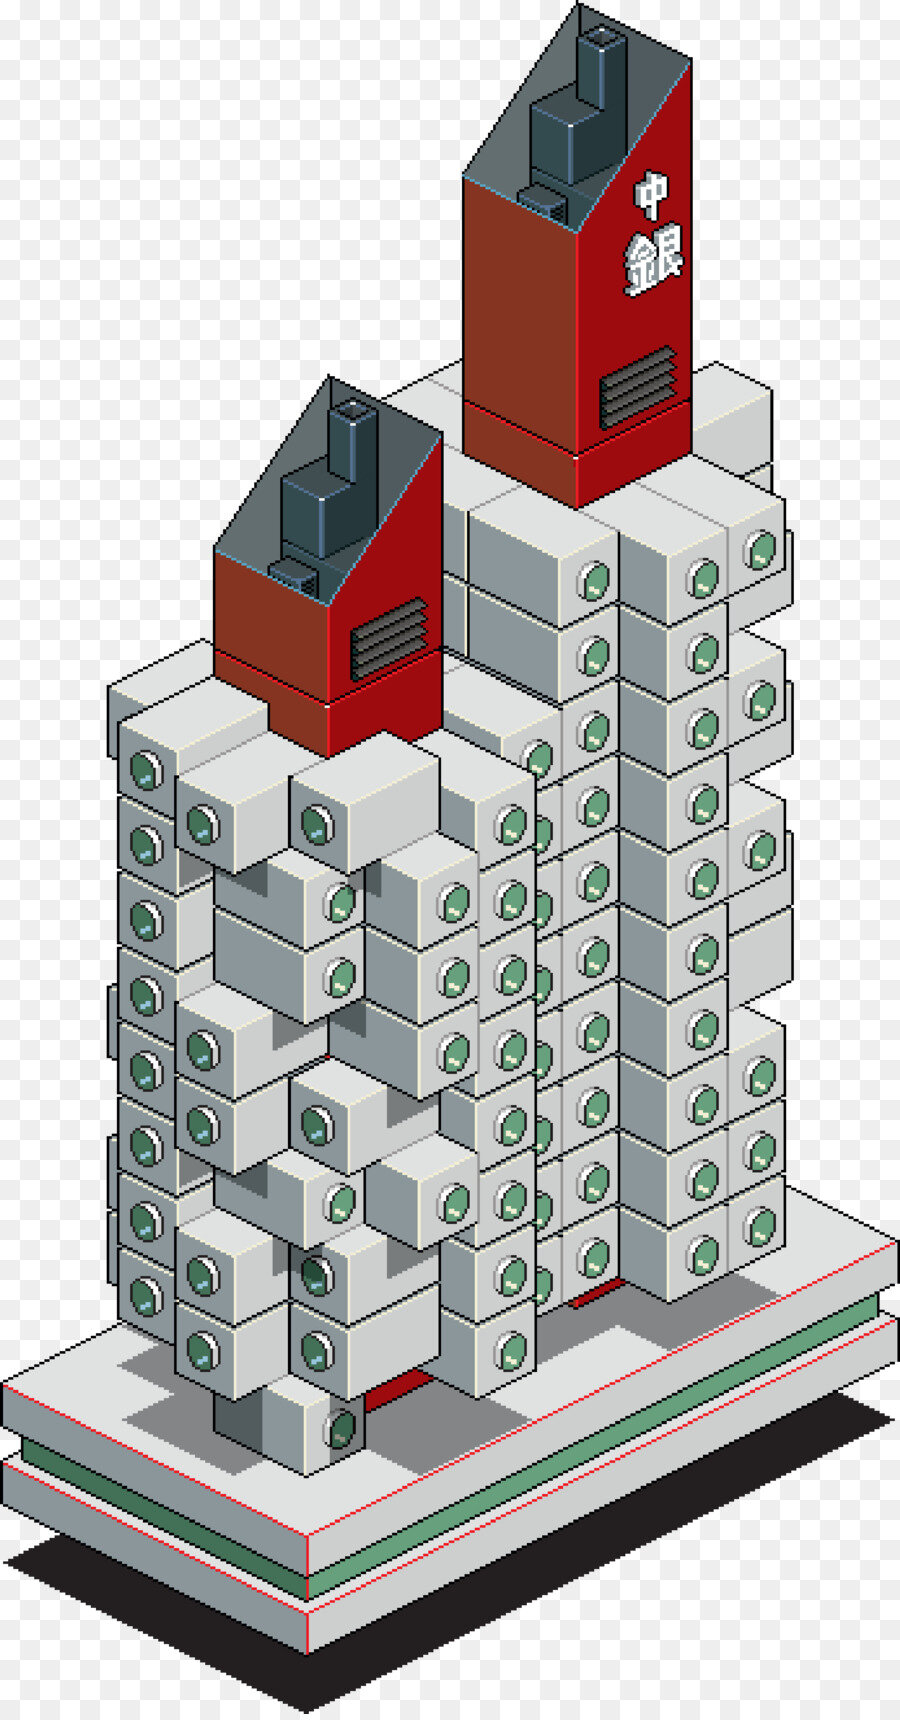 kisspng-nakagin-capsule-tower-architecture-building-plan-buildings-5ae0be1453dab1.3315667615246781643435.jpg